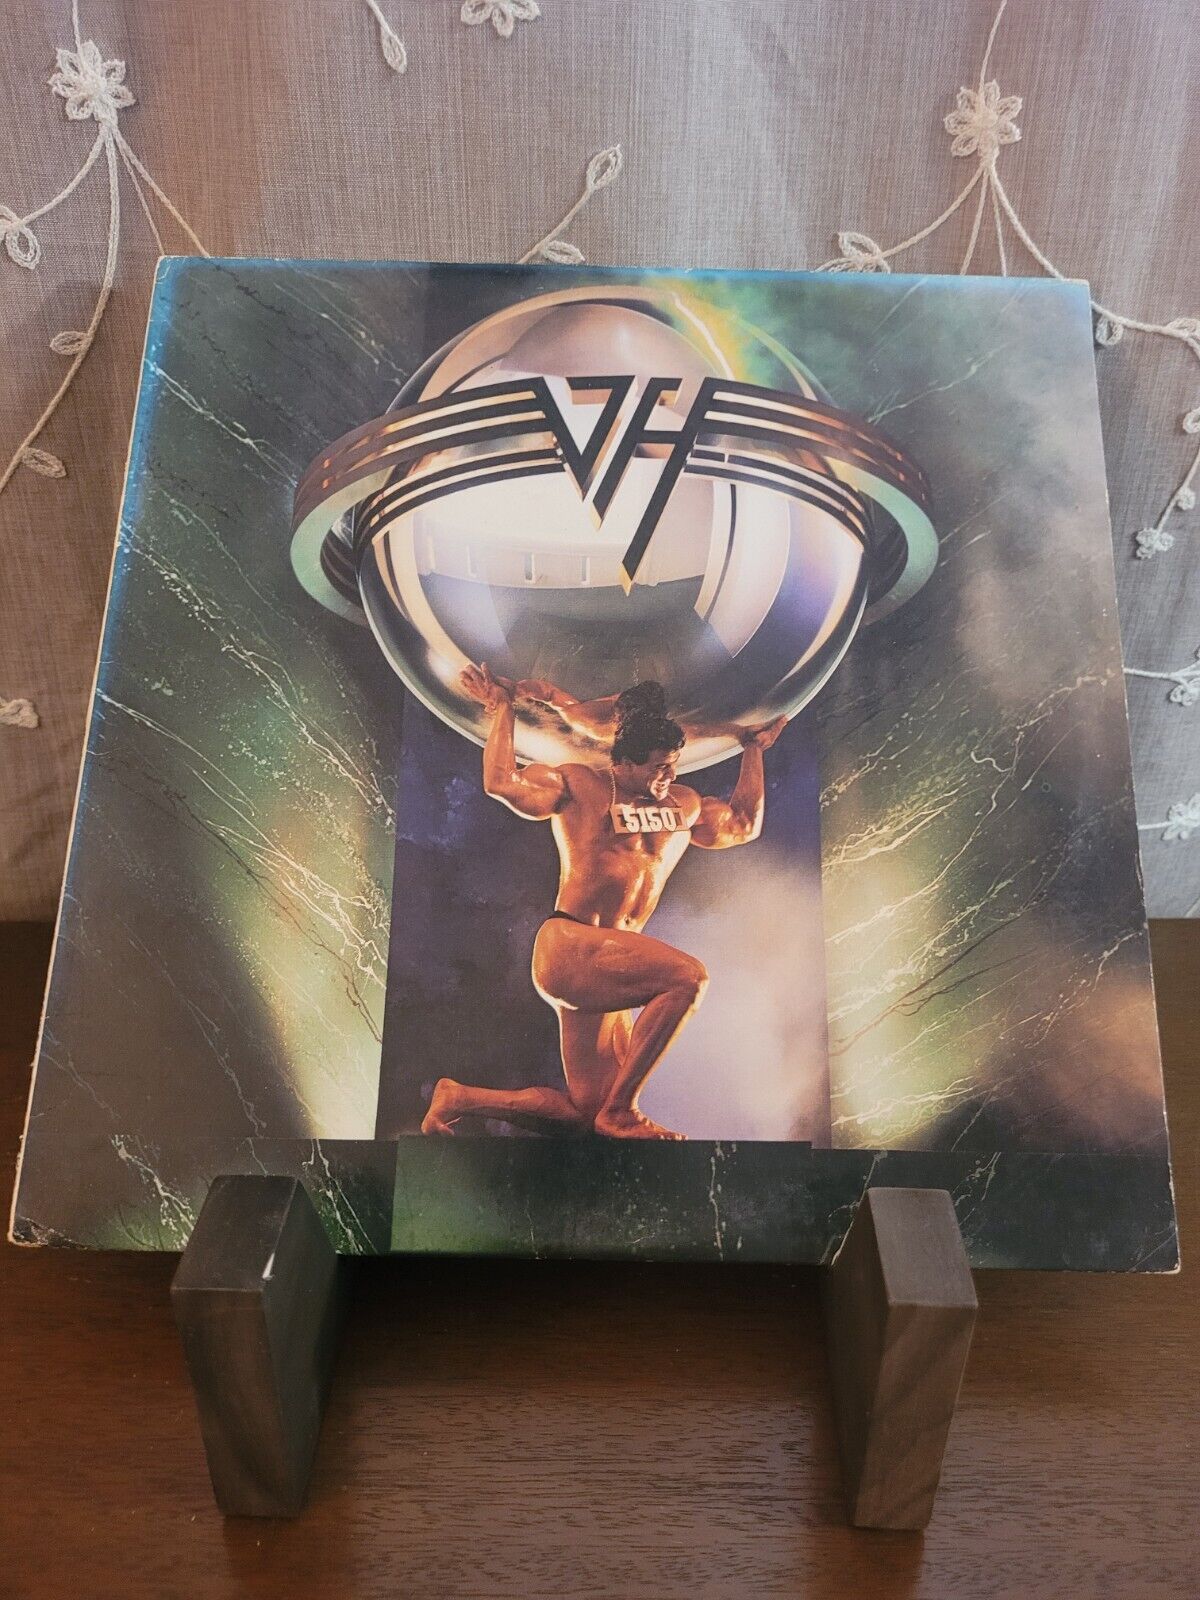 Van Halen - 5150 LP Warner Bros. 1-25394 1986 Pressing with Inner Sleeve  